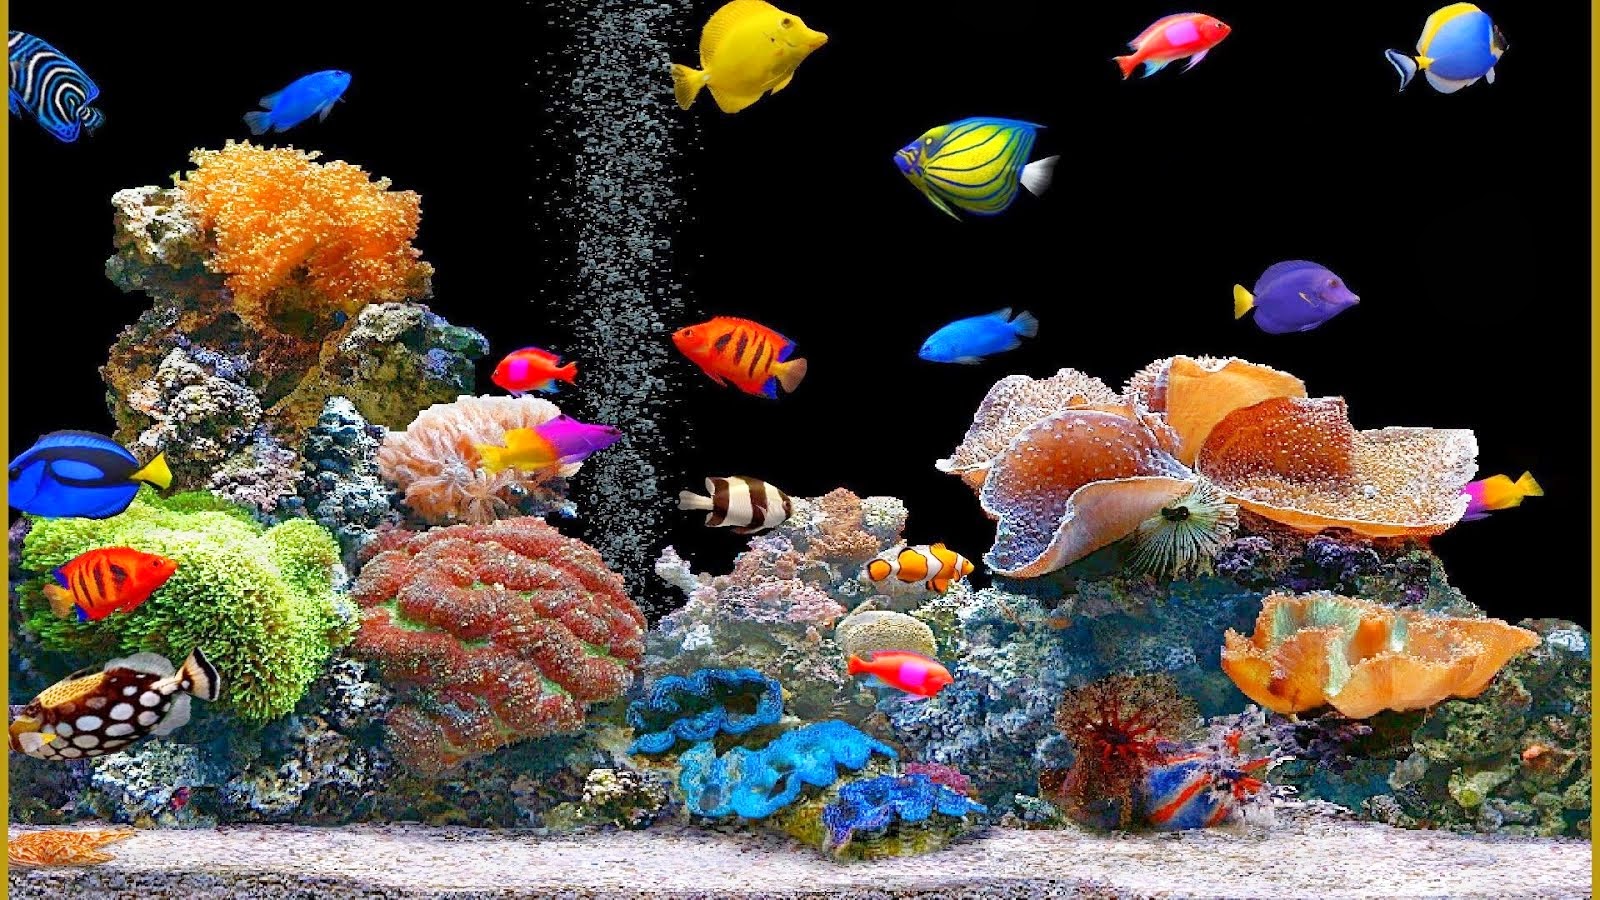 [49+] Moving Fish Aquarium Wallpaper | WallpaperSafari.com